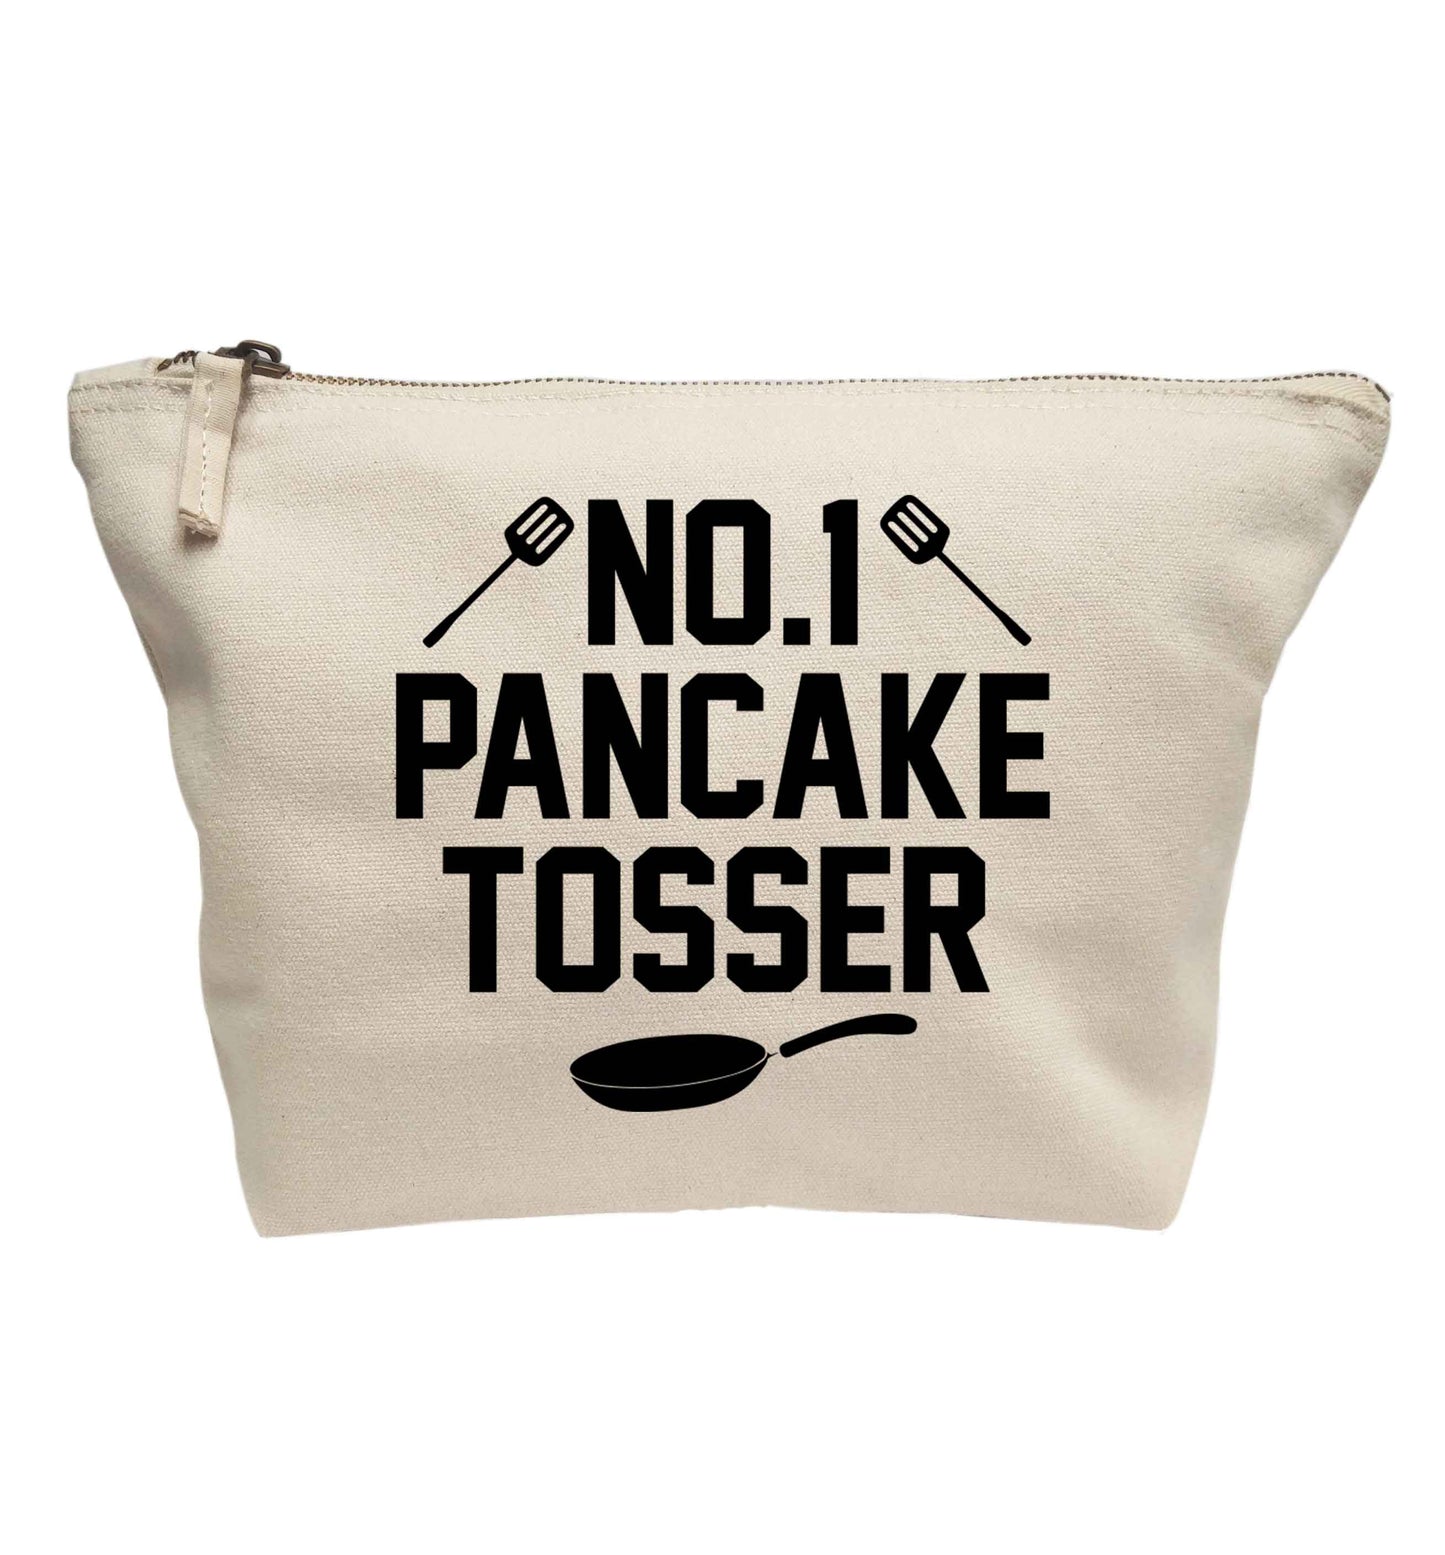 No.1 Pancake tosser | Makeup / wash bag